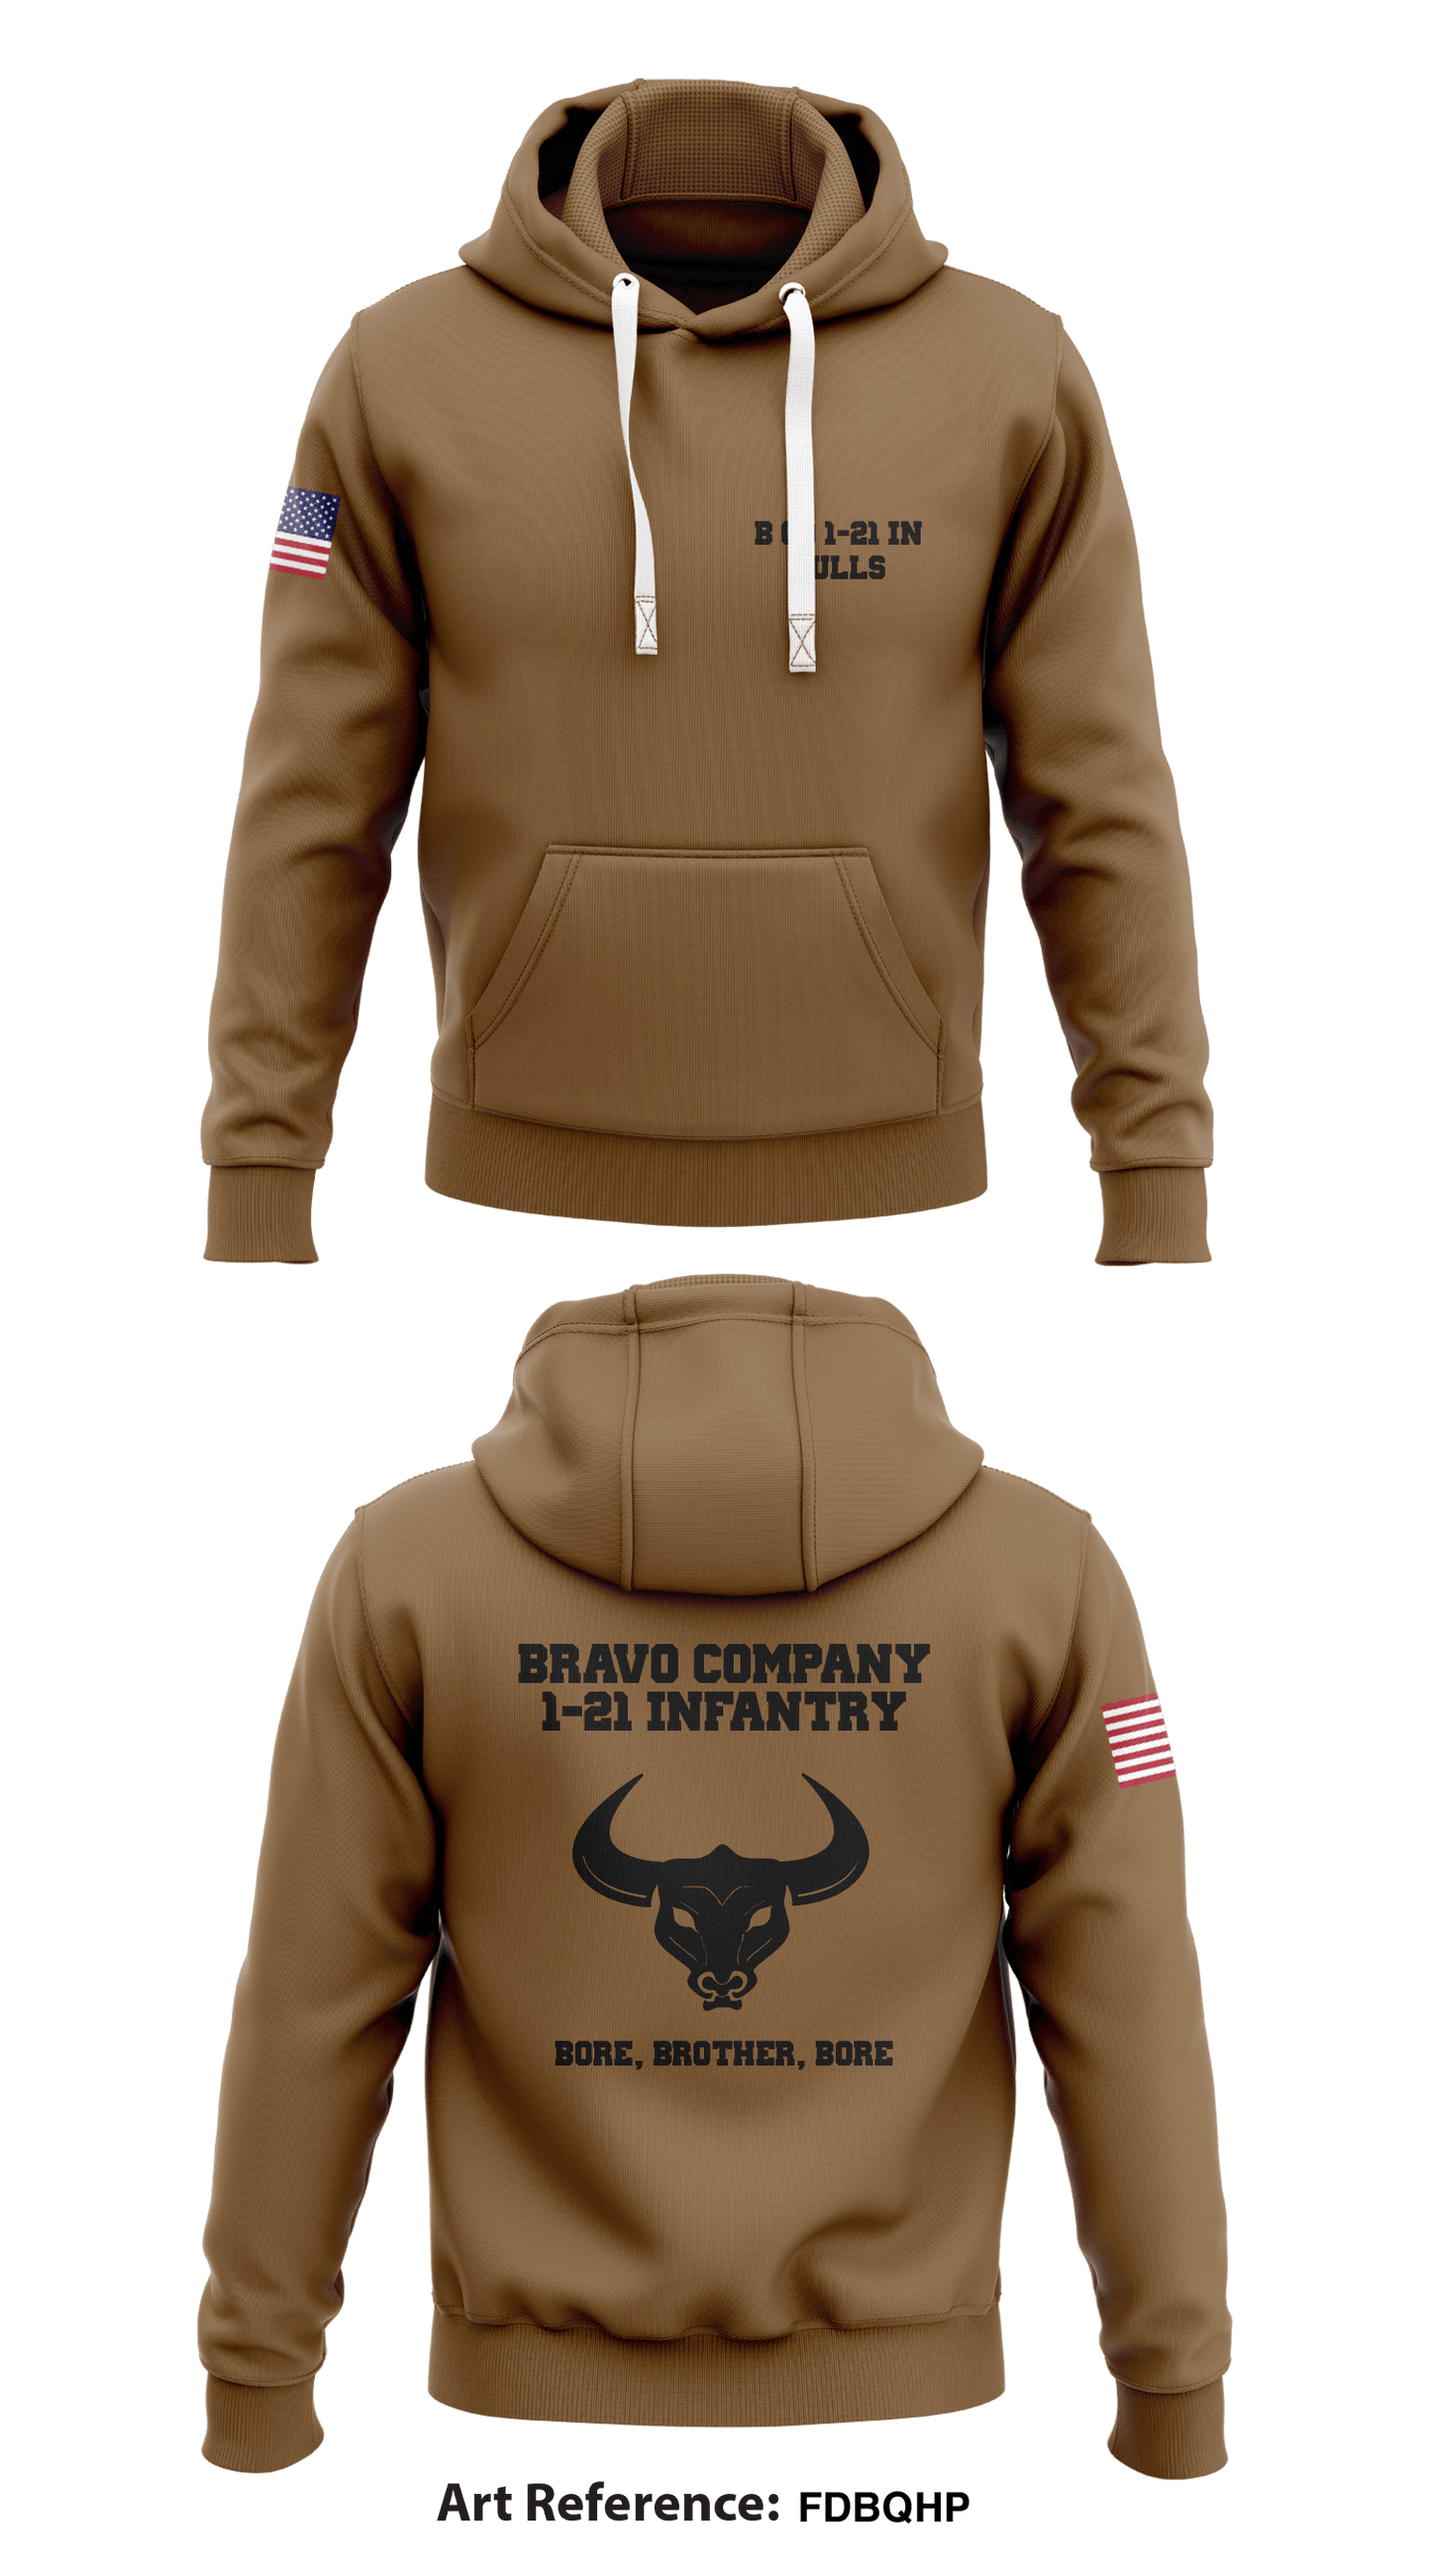 B co 1-21IN Bulls Store 1  Core Men's Hooded Performance Sweatshirt - fdbQHP